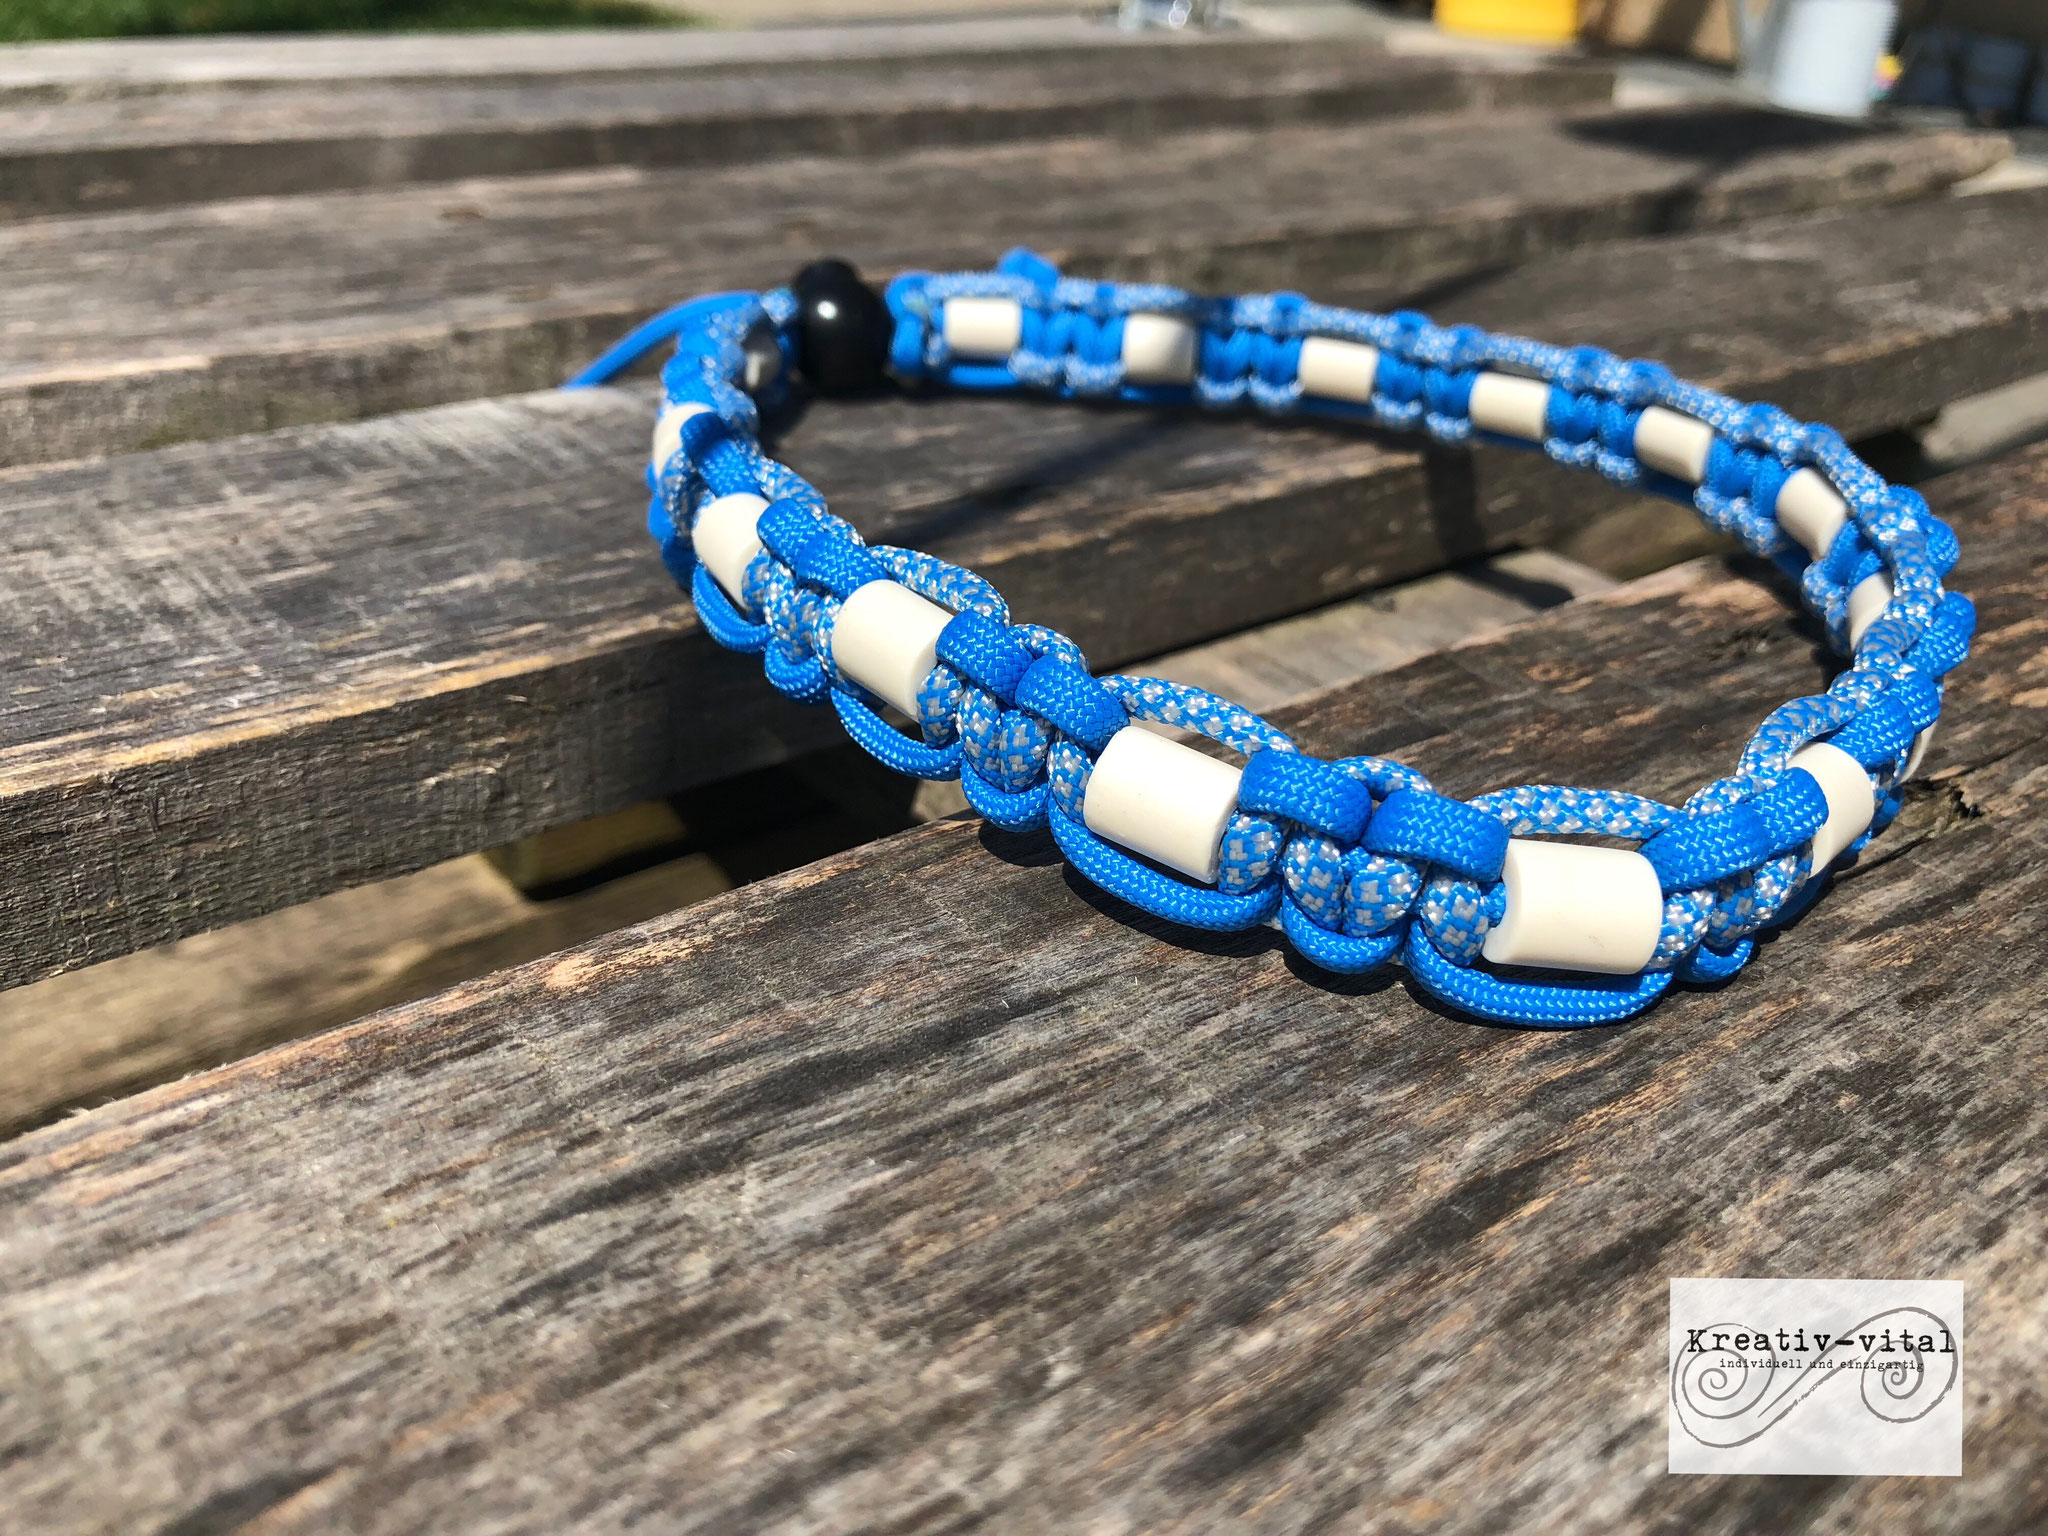 EM Keramik Halsband für Hund/Katze 46-50cm Halsumfang blue/colonial blue